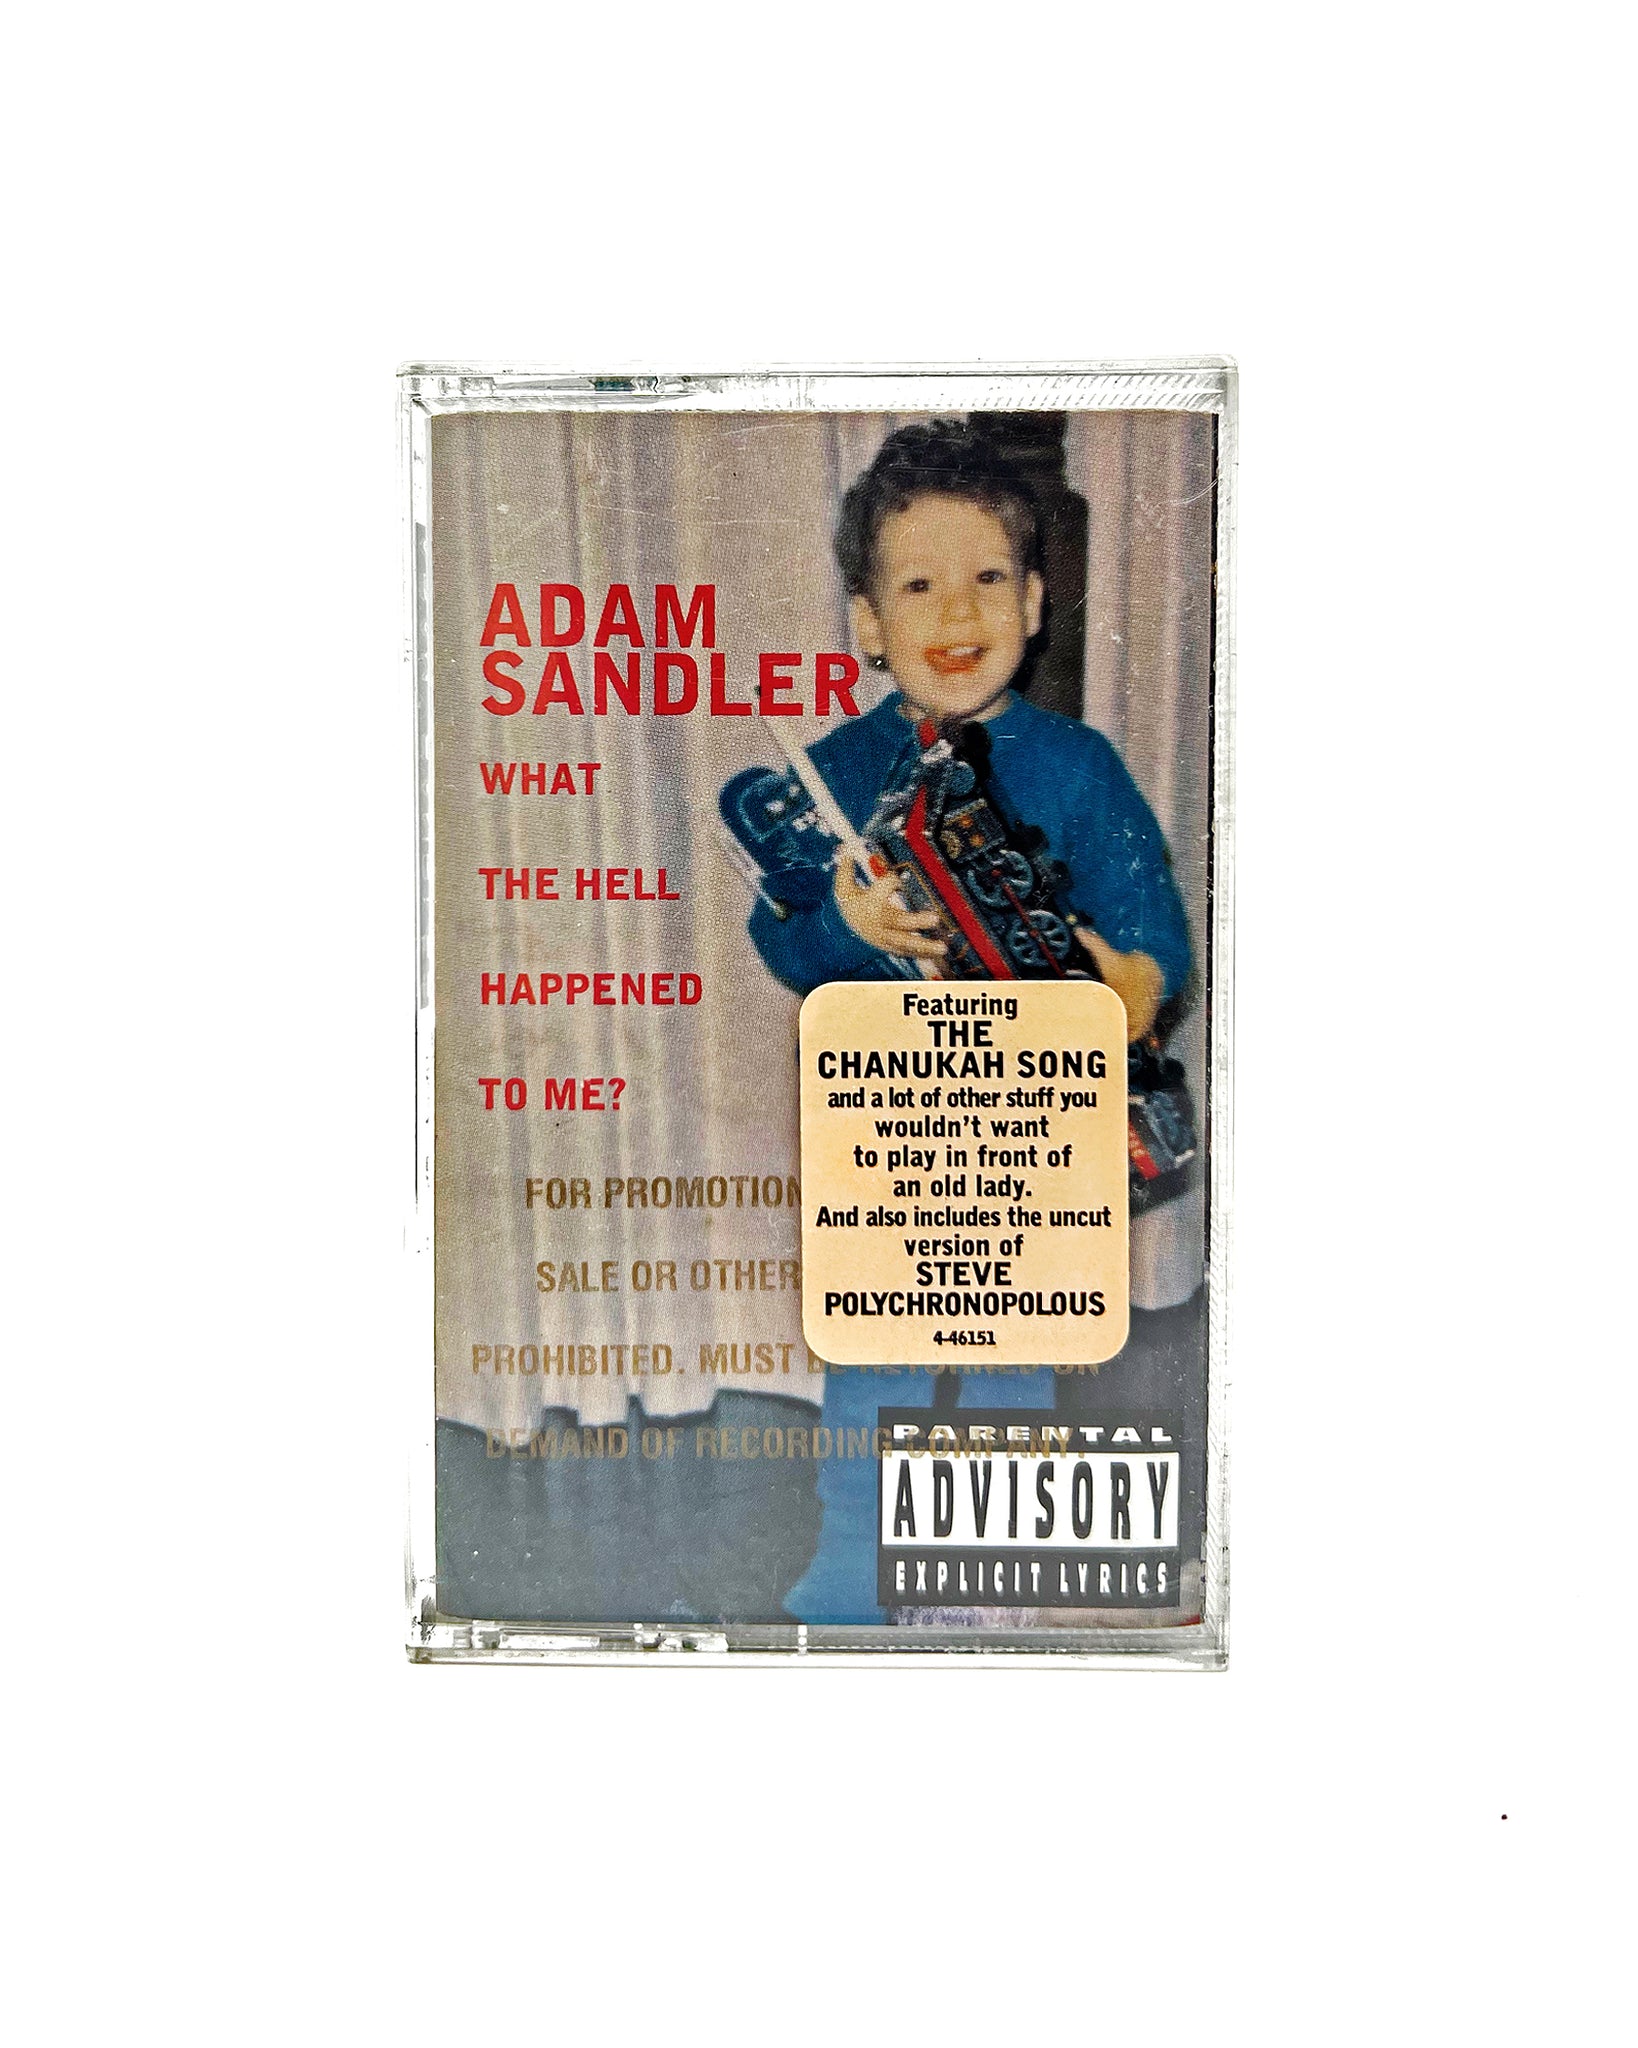 Vintage Holiday Cassette Tape: Adam Sandler "Chanukah Song"